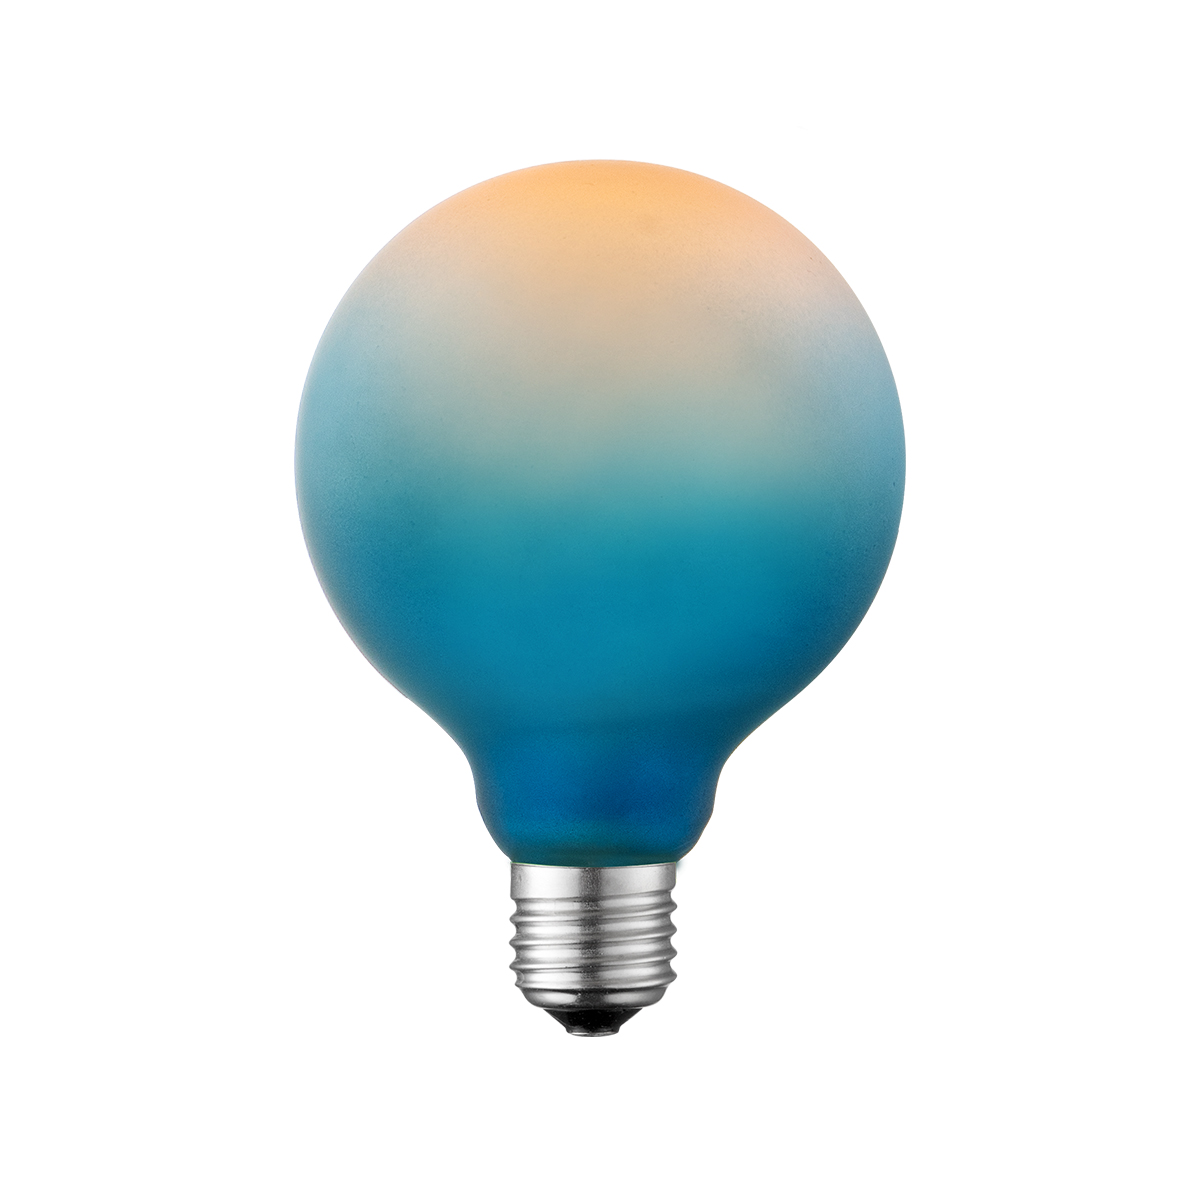 Tangla lighting - TLB-9005-04M - LED Light Bulb Single Spiral filament - G125 4W gradient blue opal - non dimmable - E27